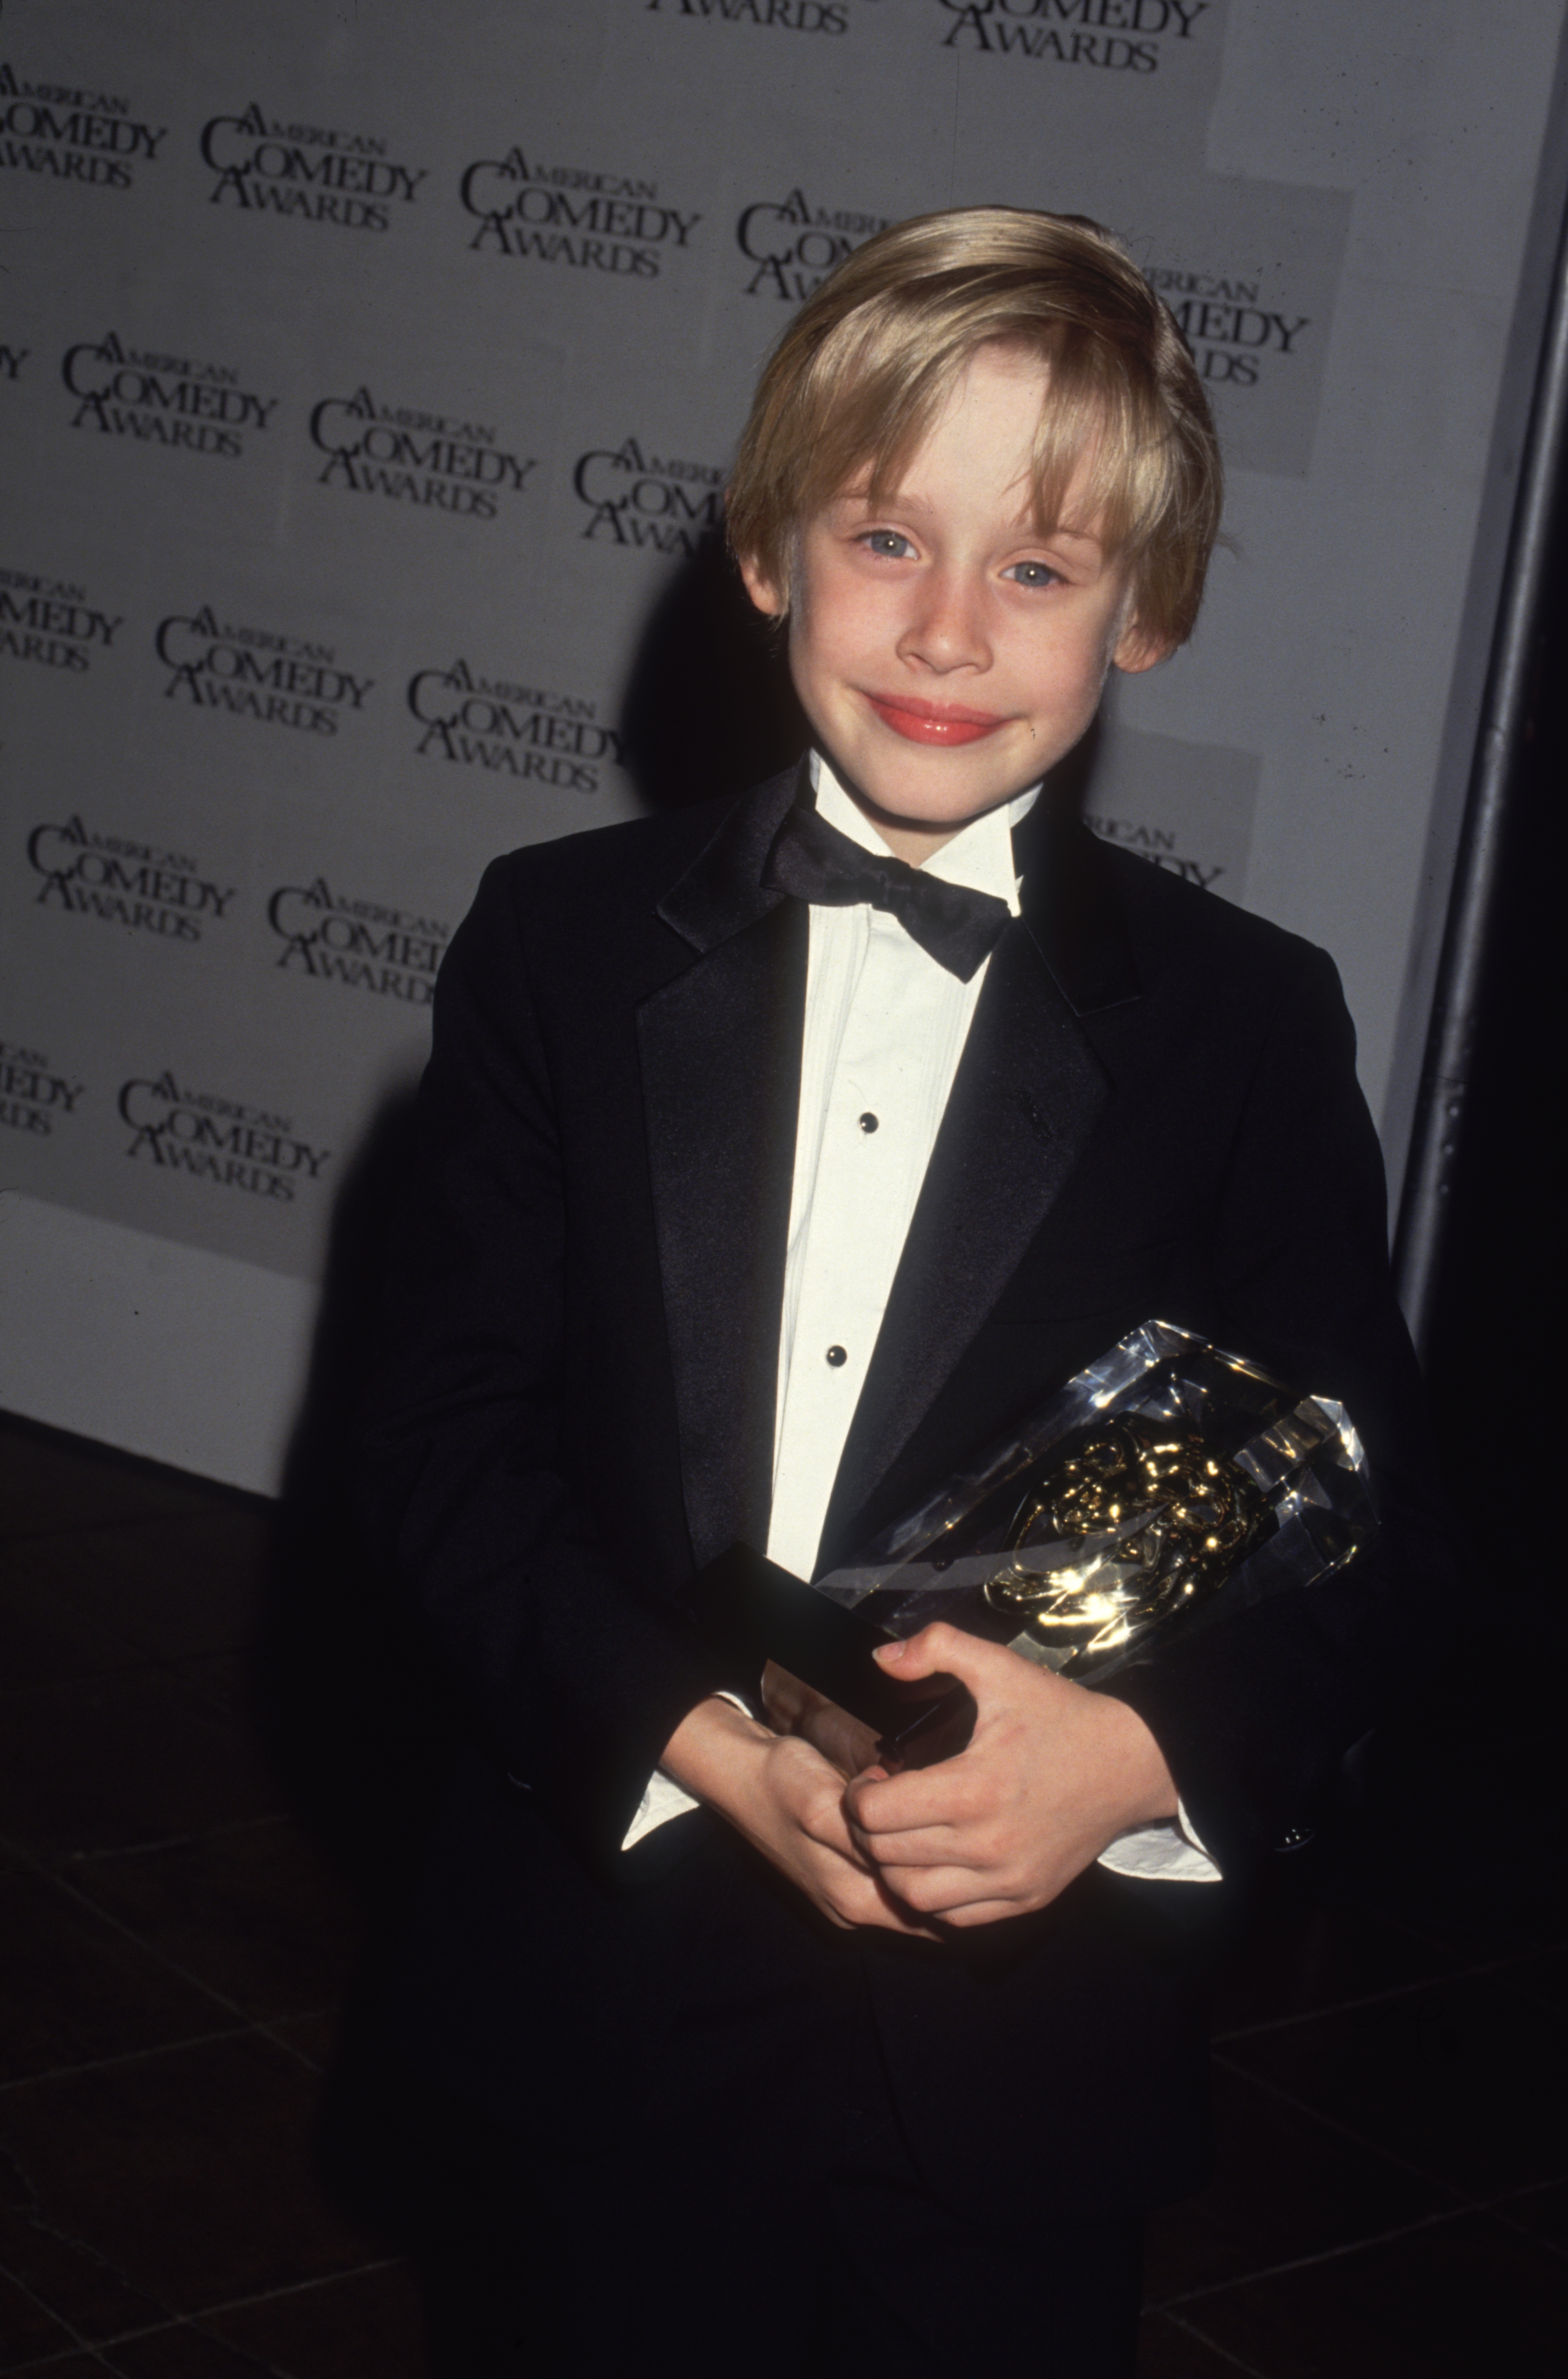 Macaulay Culkin bei den American Comedy Awards im Jahr 1991 | Quelle: Getty Images